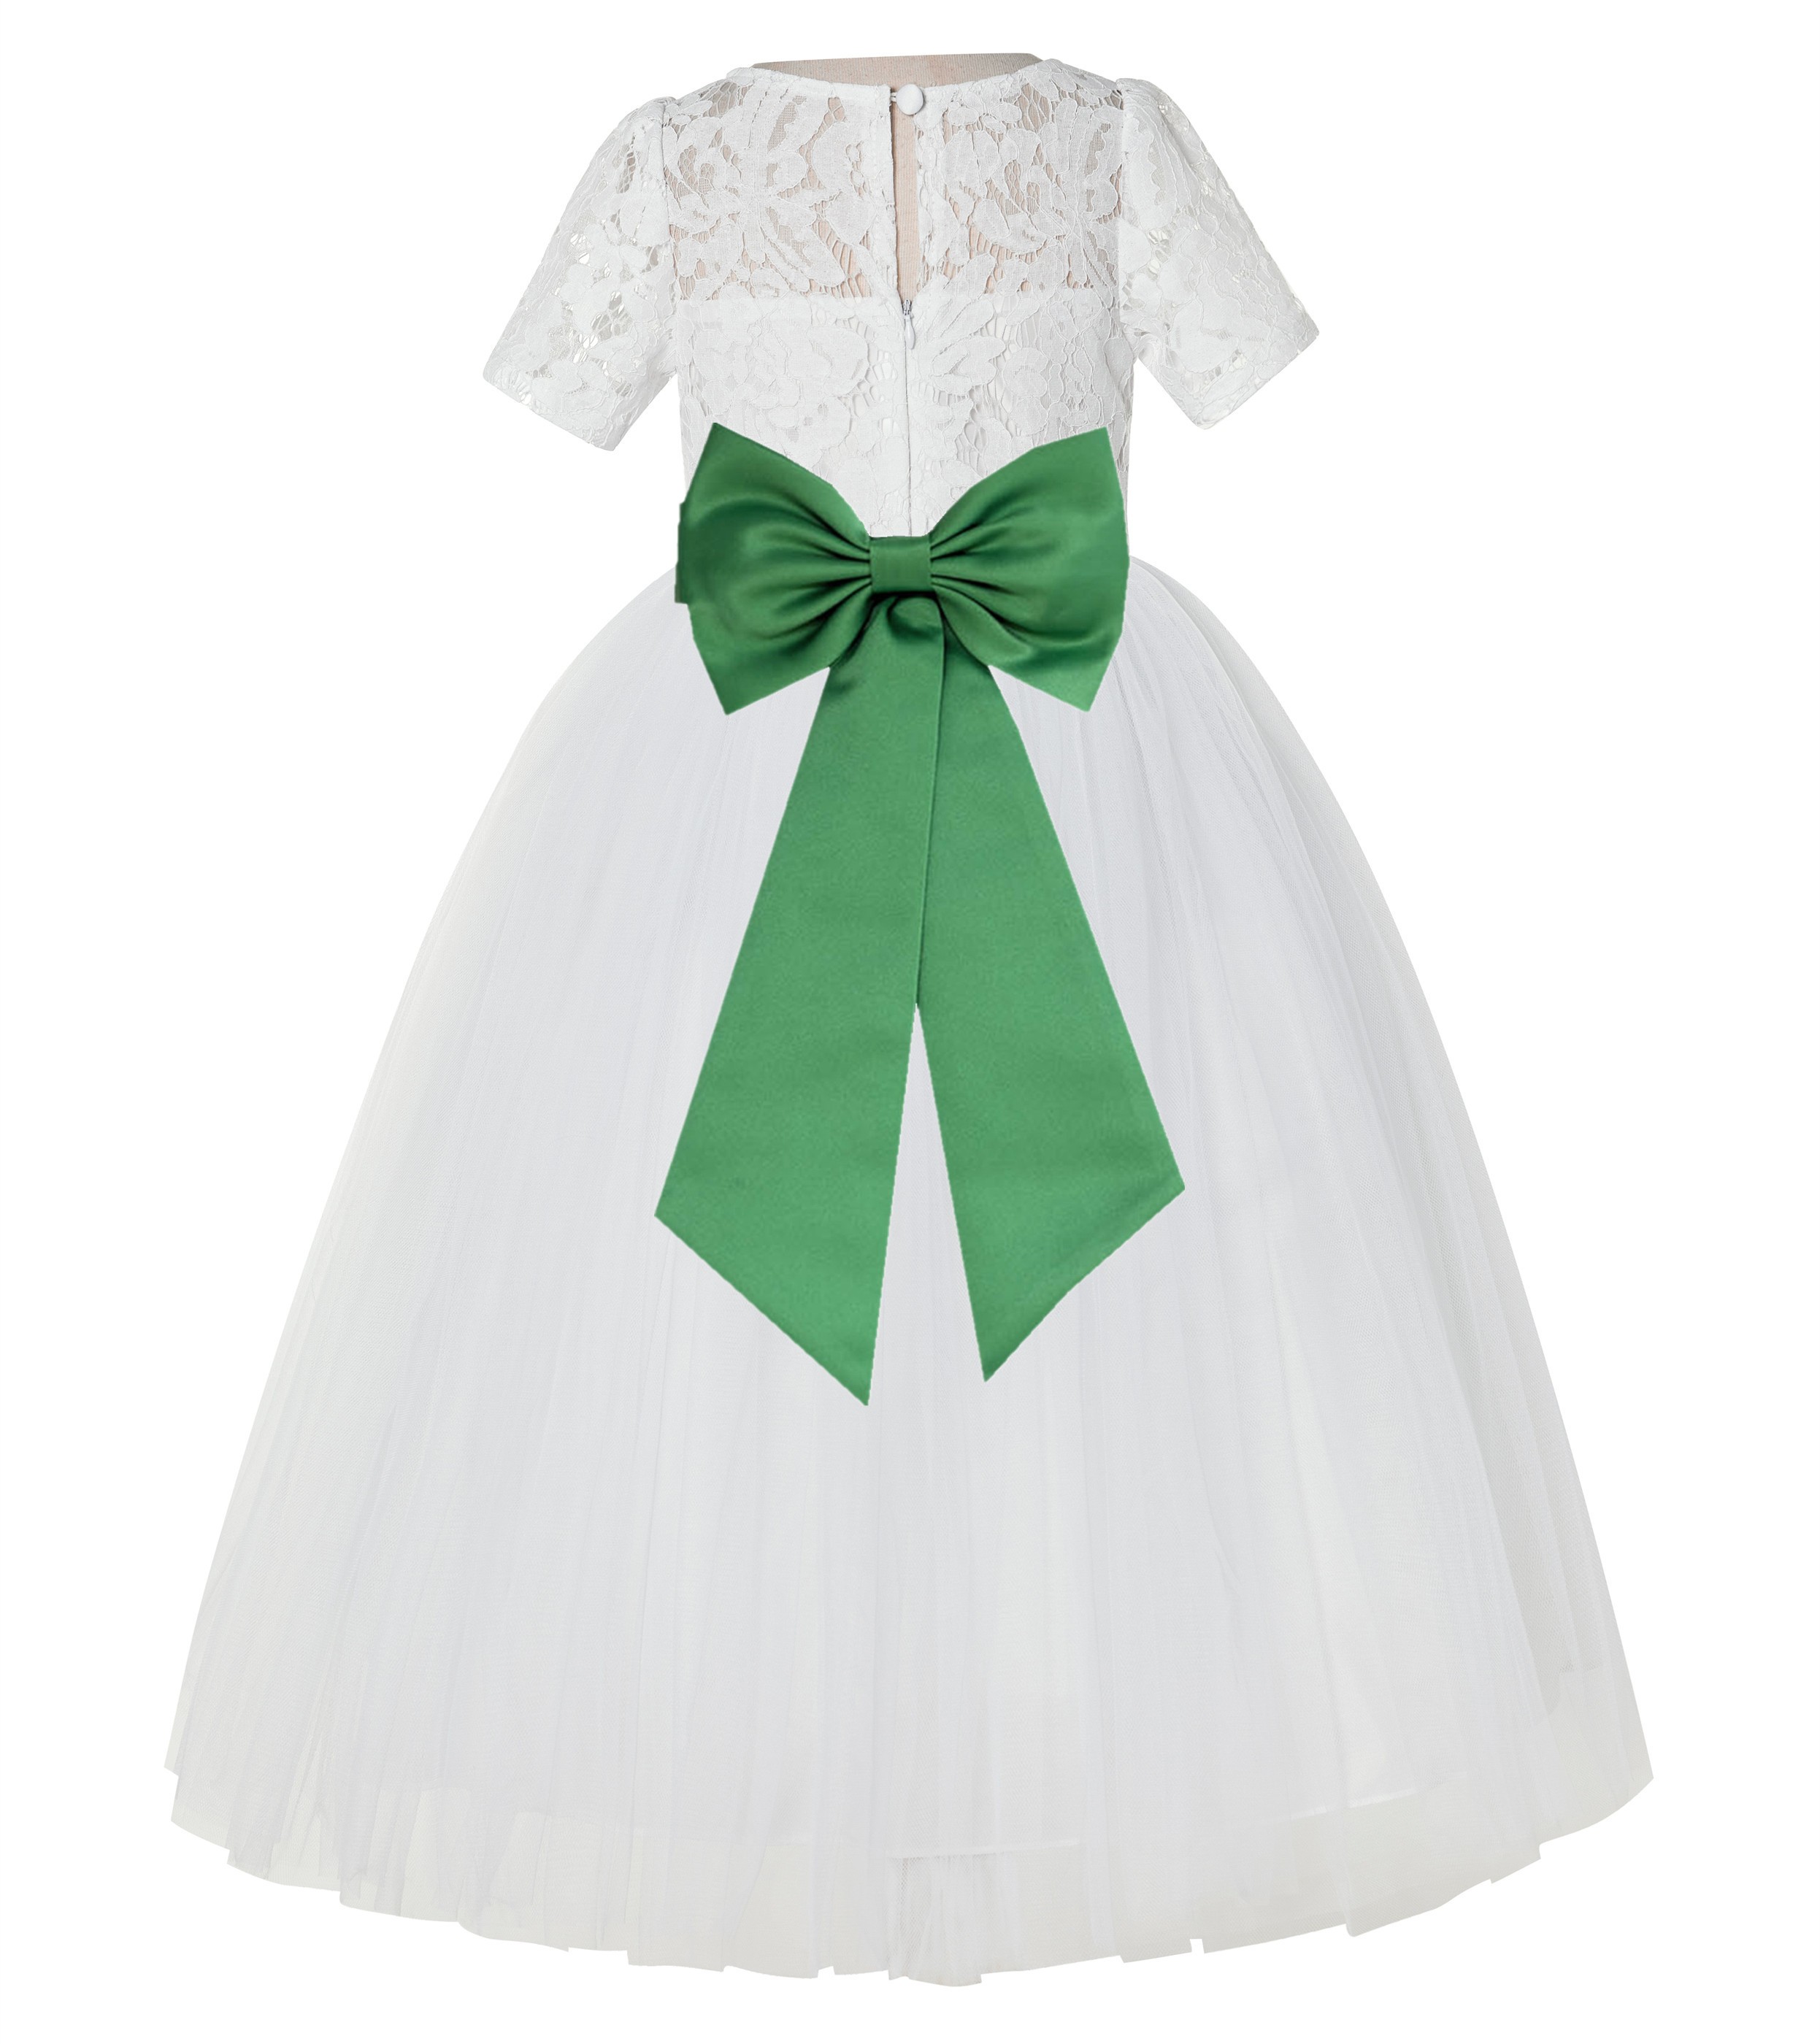 Ivory / Kelly Lime Green Floral Lace Flower Girl Dress Vintage Dress LG2